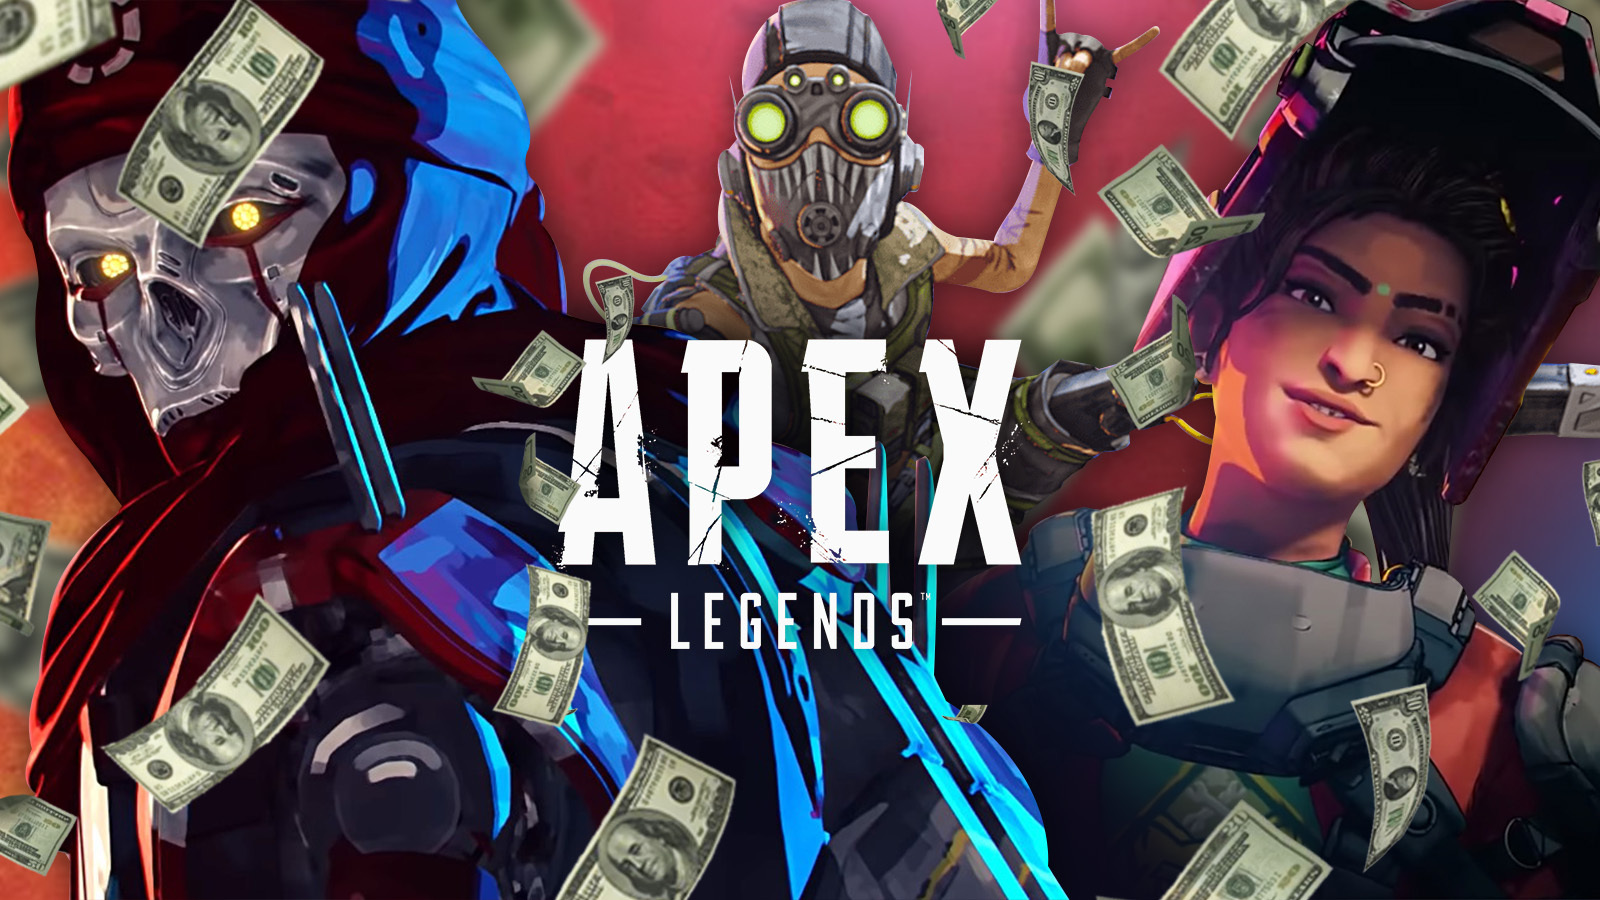 Who made Apex Legends? - Dexerto